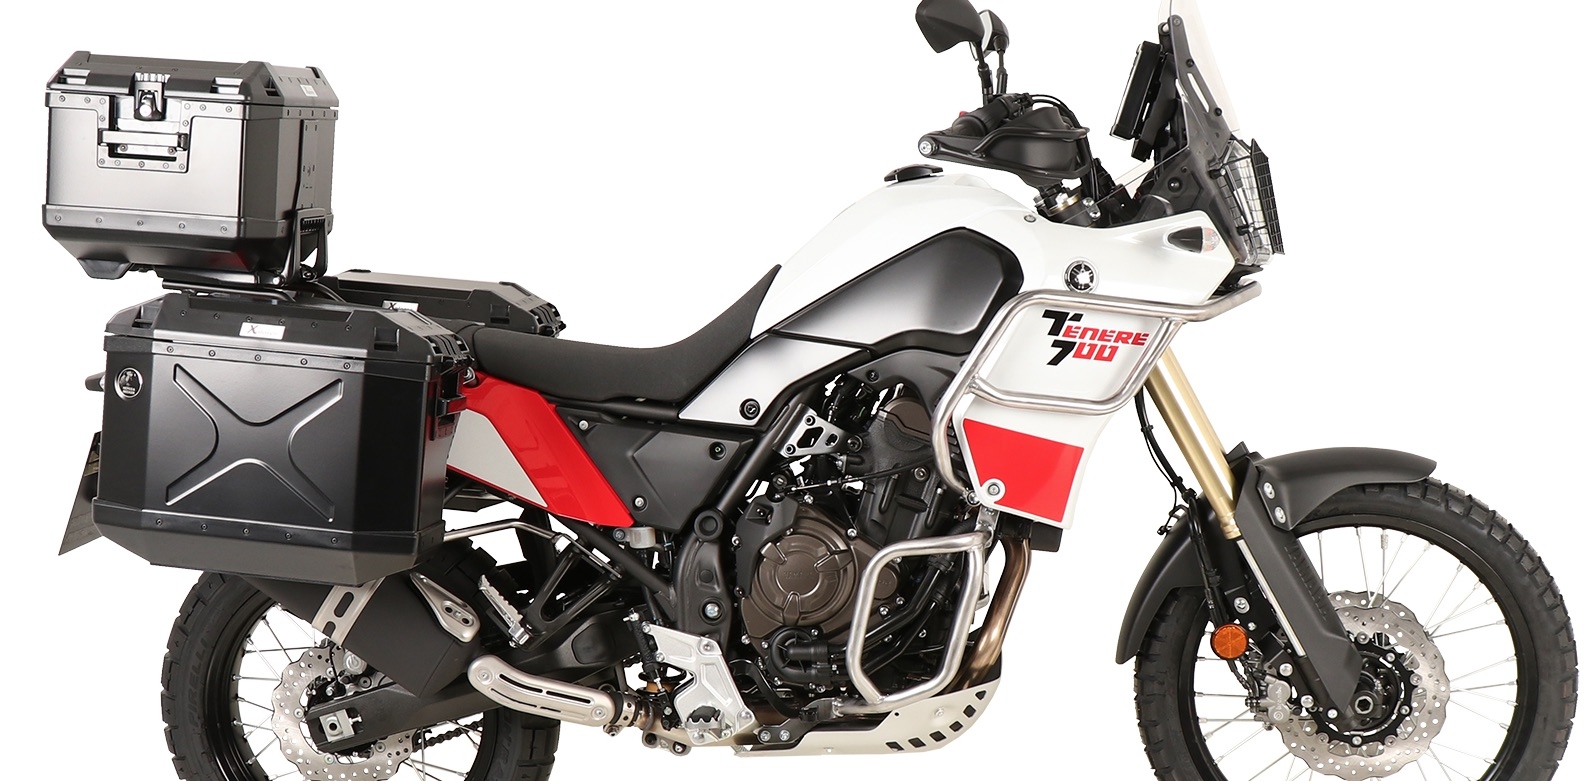 Yamaha Tenere 700 :- Your new adventures await!